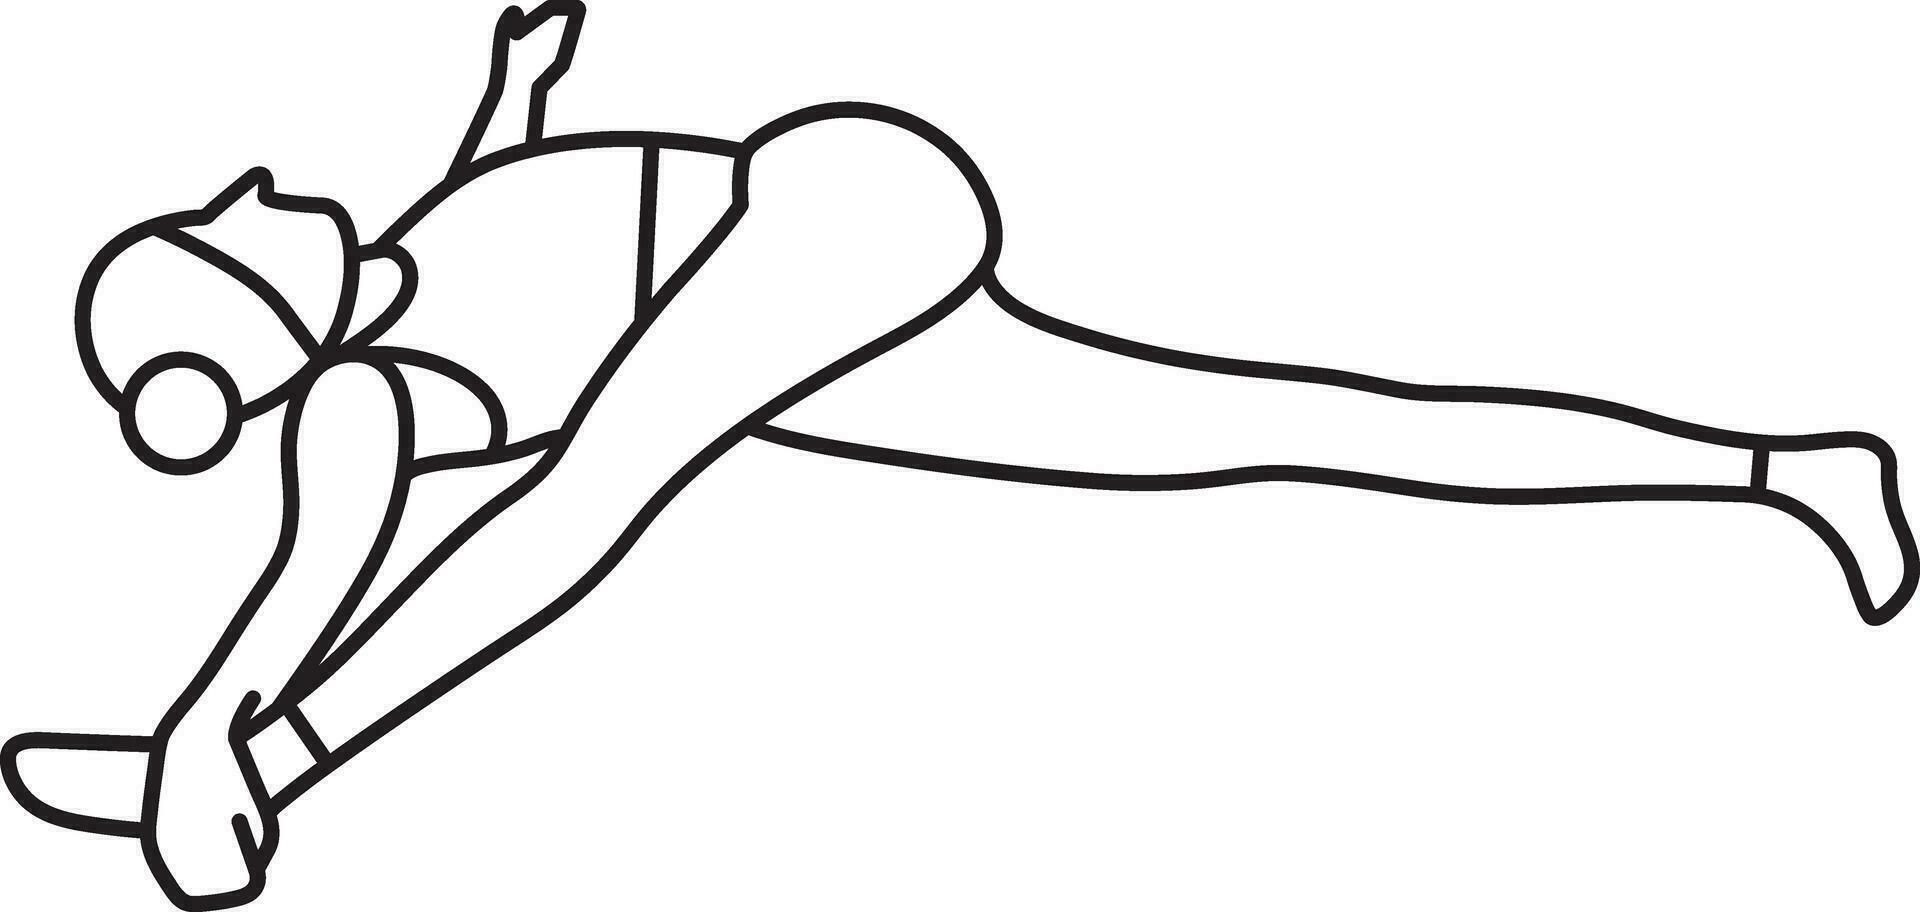 Simple vector illustration of Supta Padangushtahasana 3, healthy lifestyle, sports, yoga asana, doodle and sketch